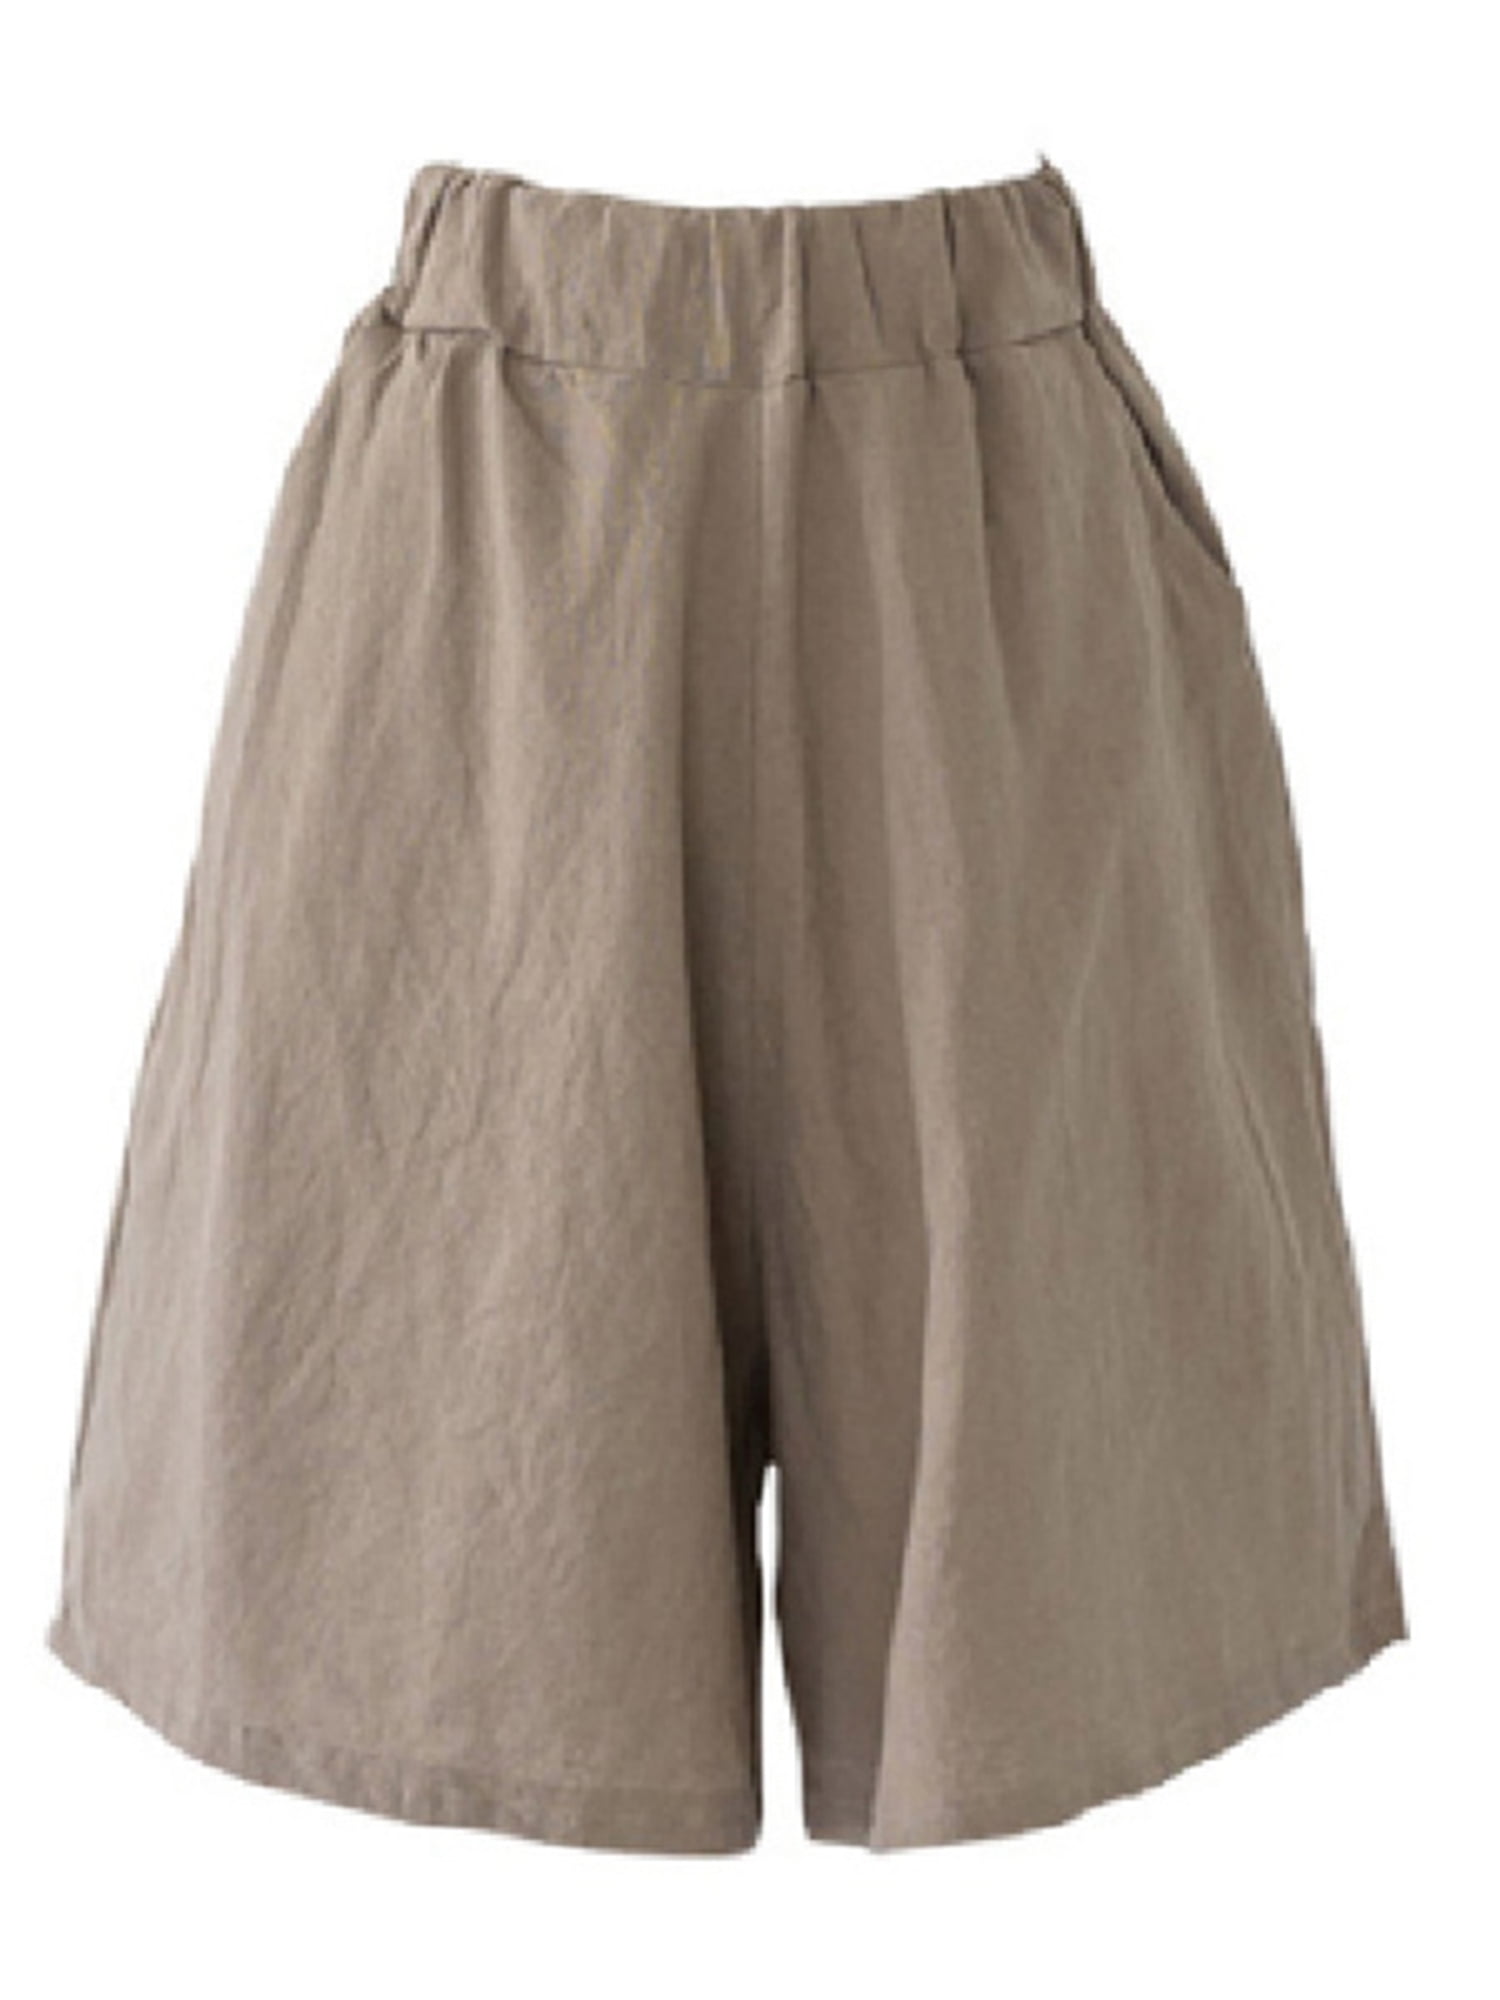 Capreze Summer Short Pants Women Lounge Beach Shorts Casual Cotton ...